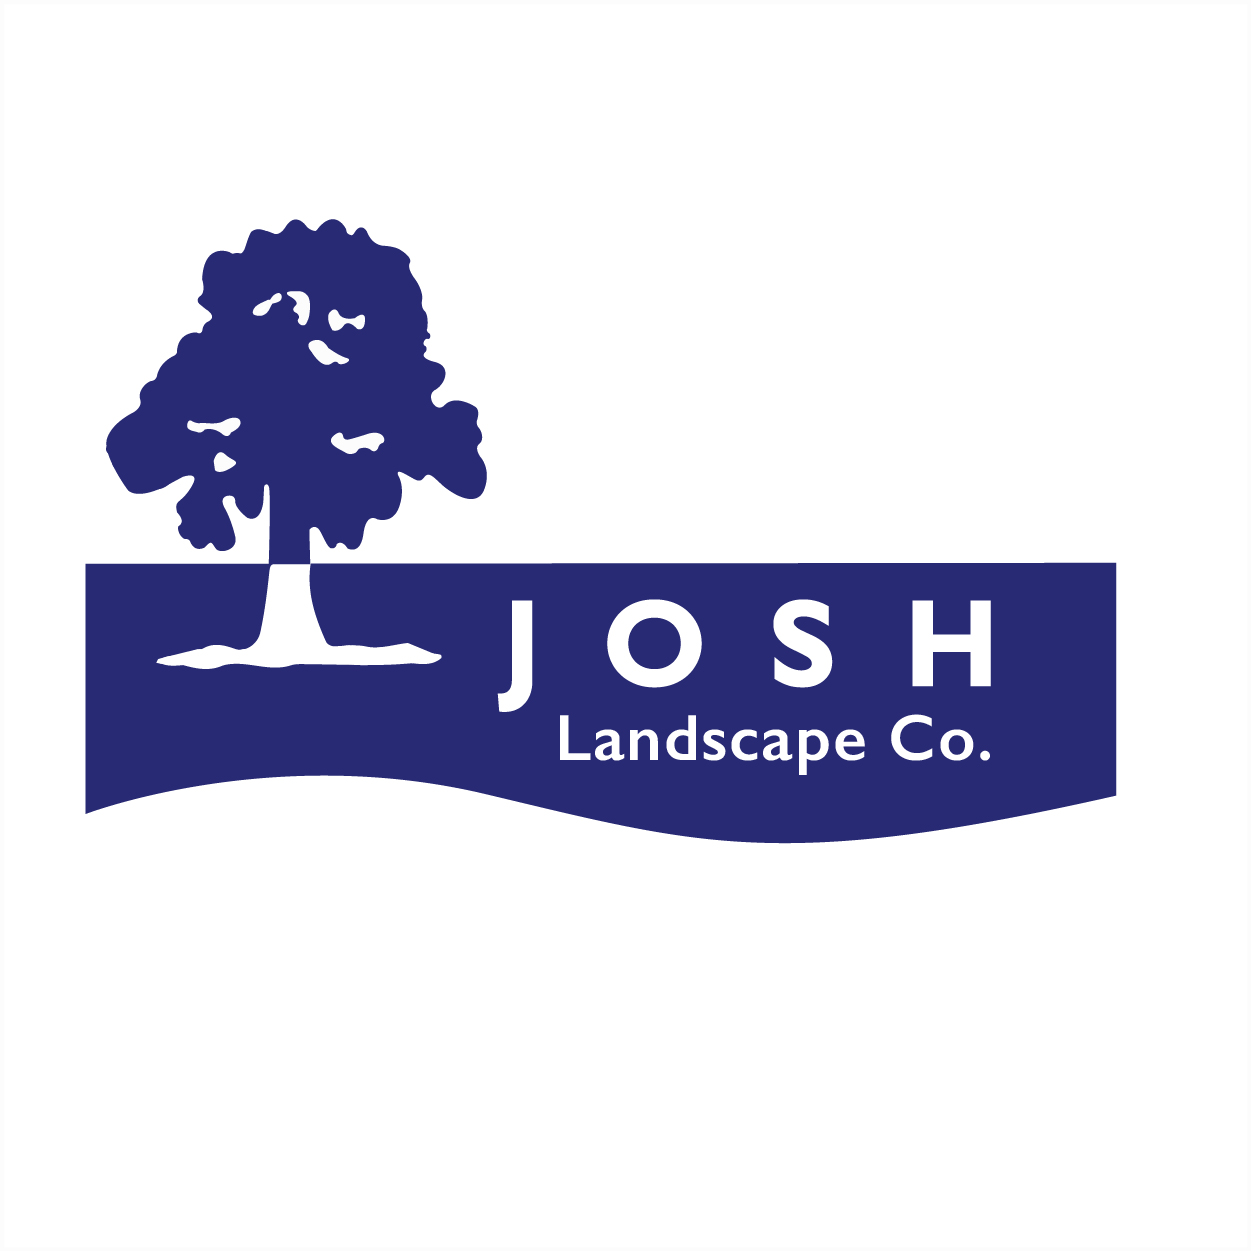 Josh Landscape Co. logo